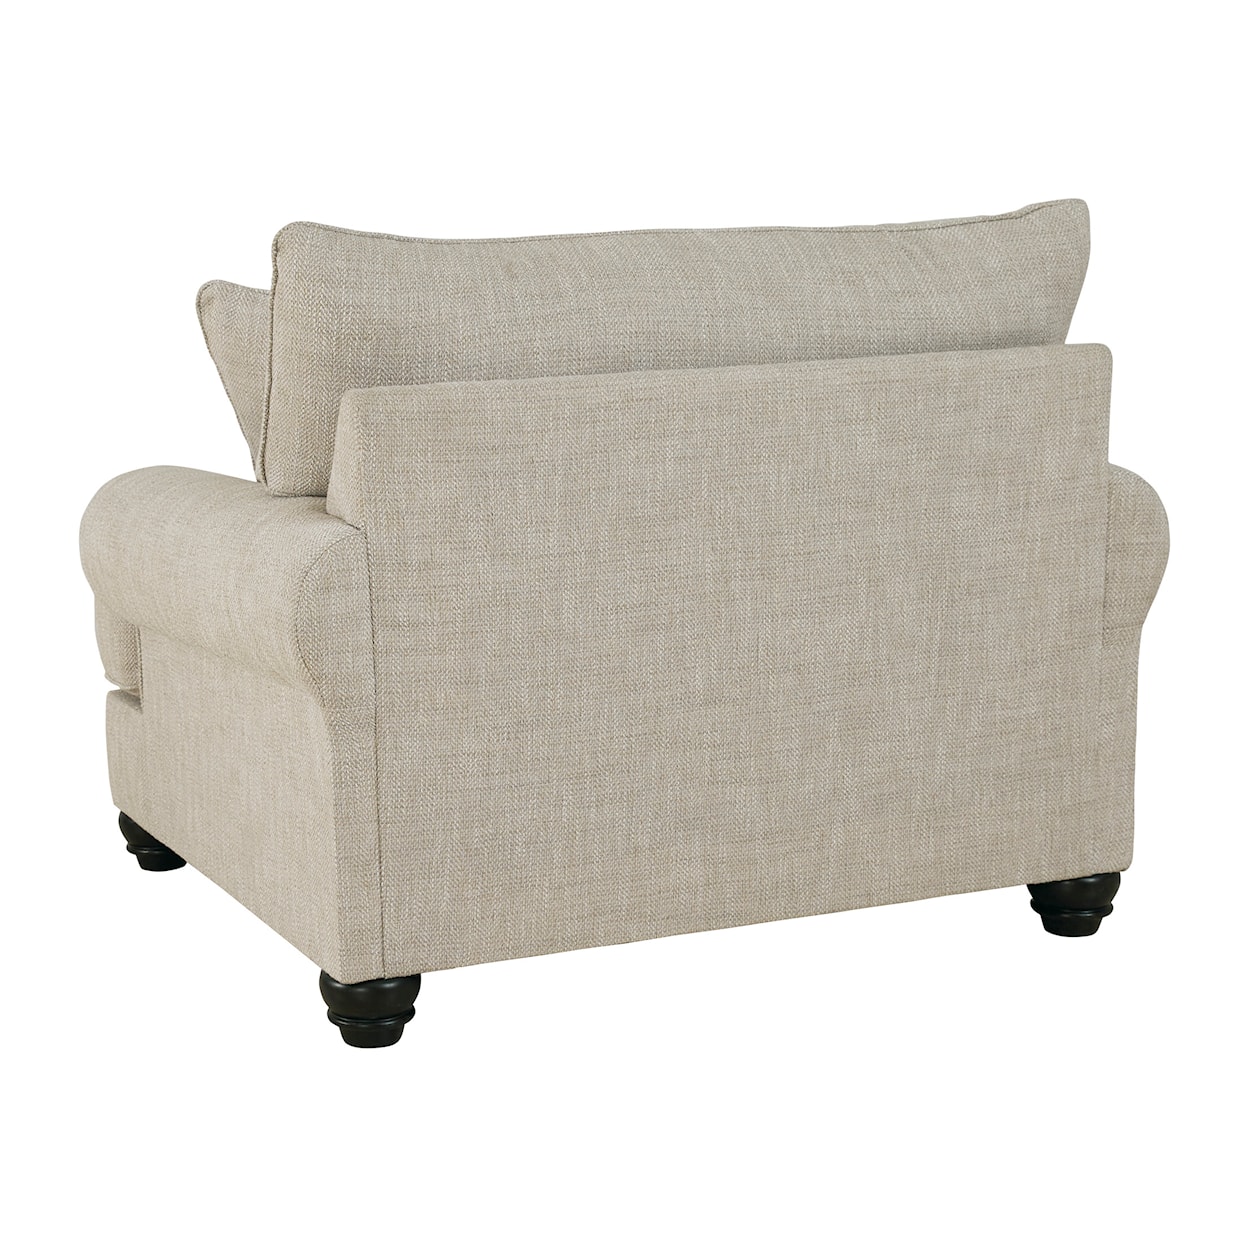 Ashley Furniture Benchcraft Asanti Oversized Chair